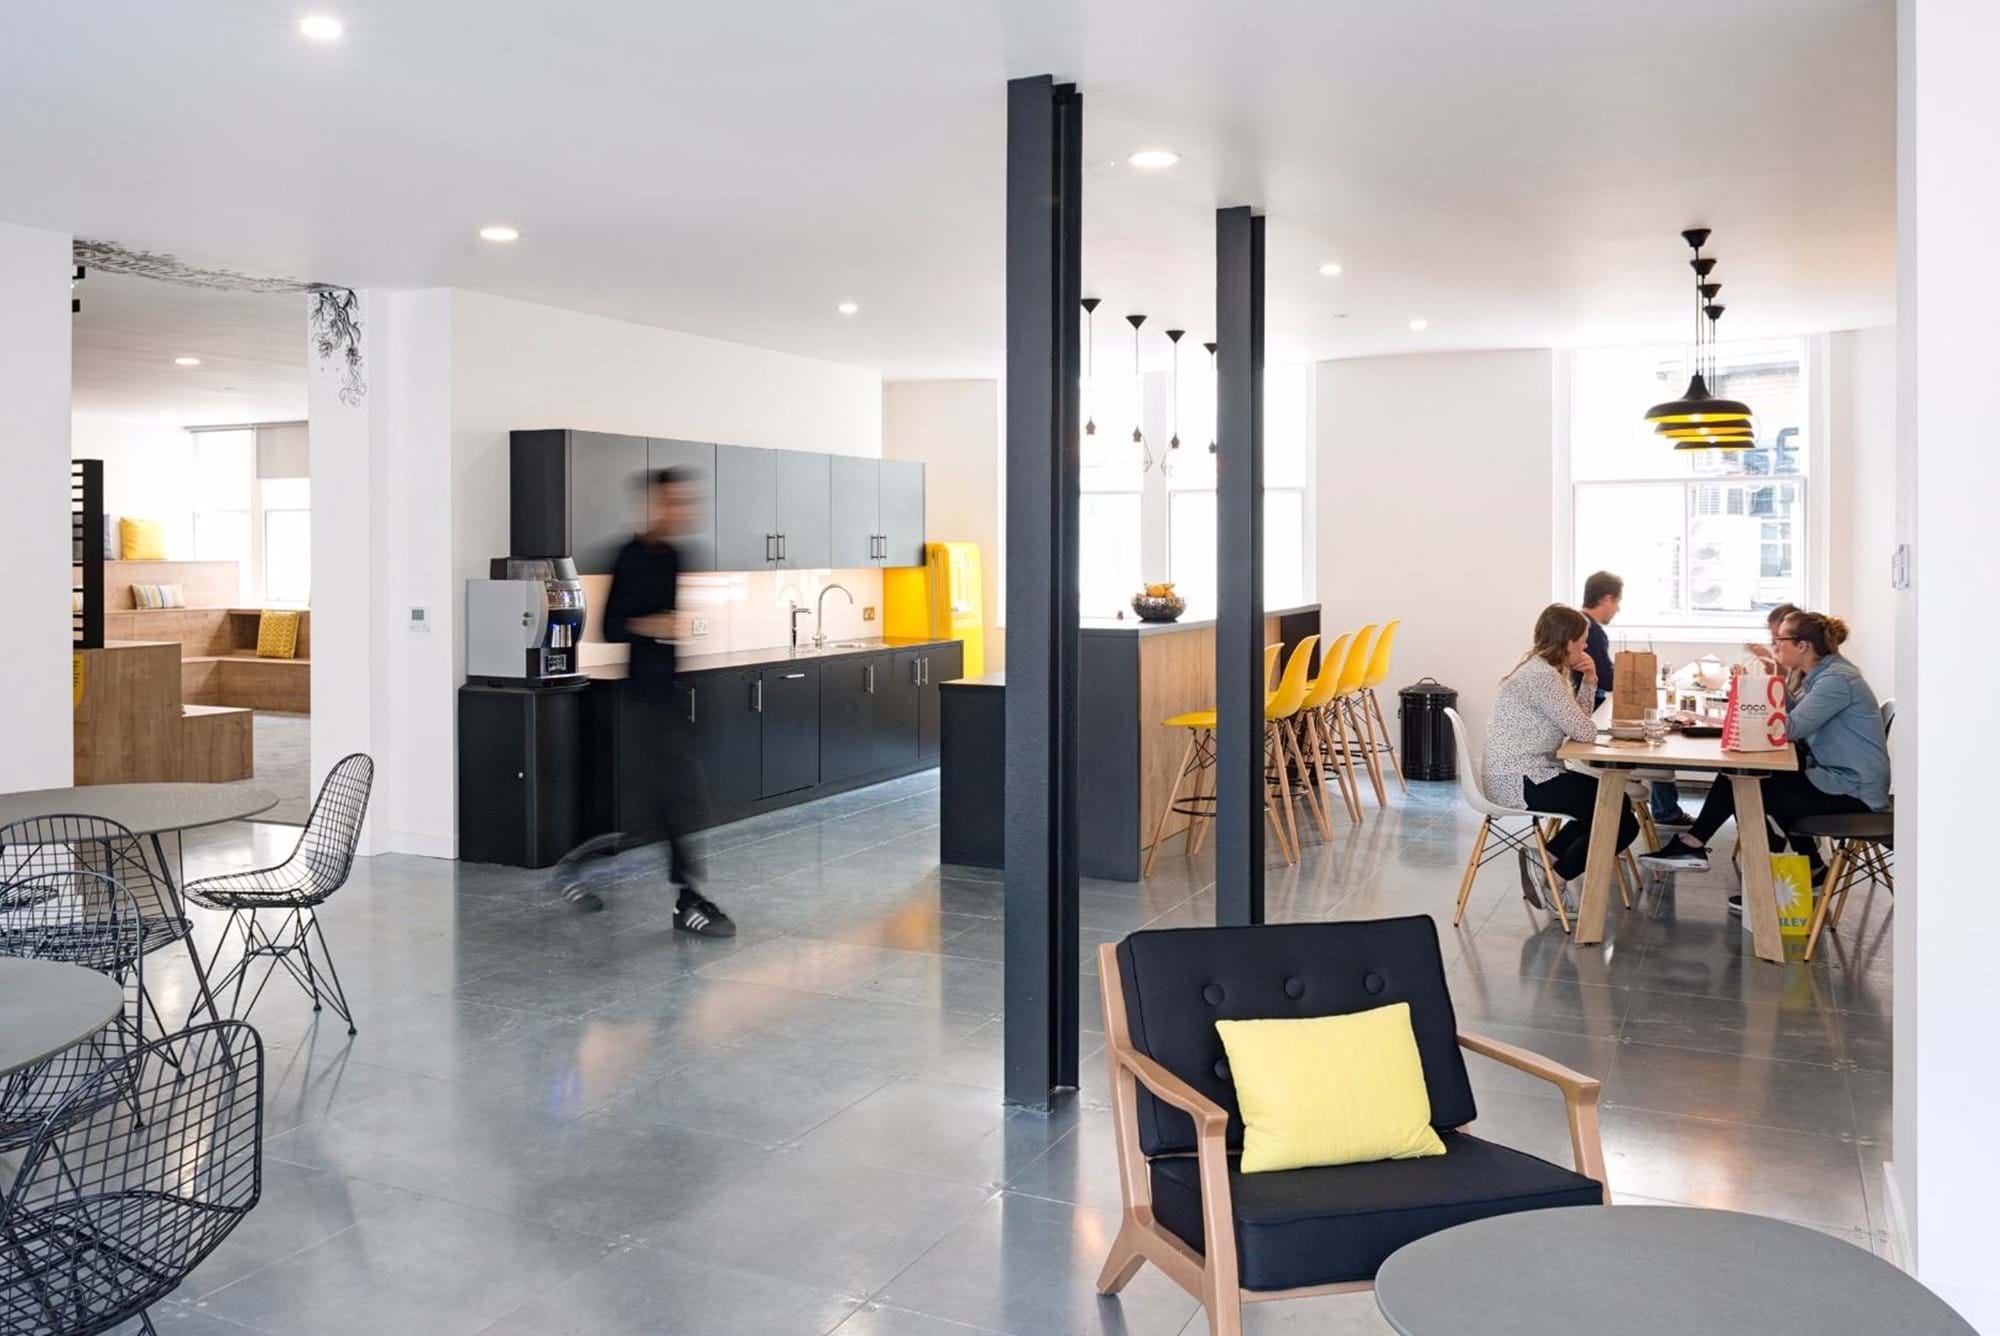 Modus Workspace office design, fit out and refurbishment - Ruderfinn - Ruder Finn 10 highres sRGB.jpg